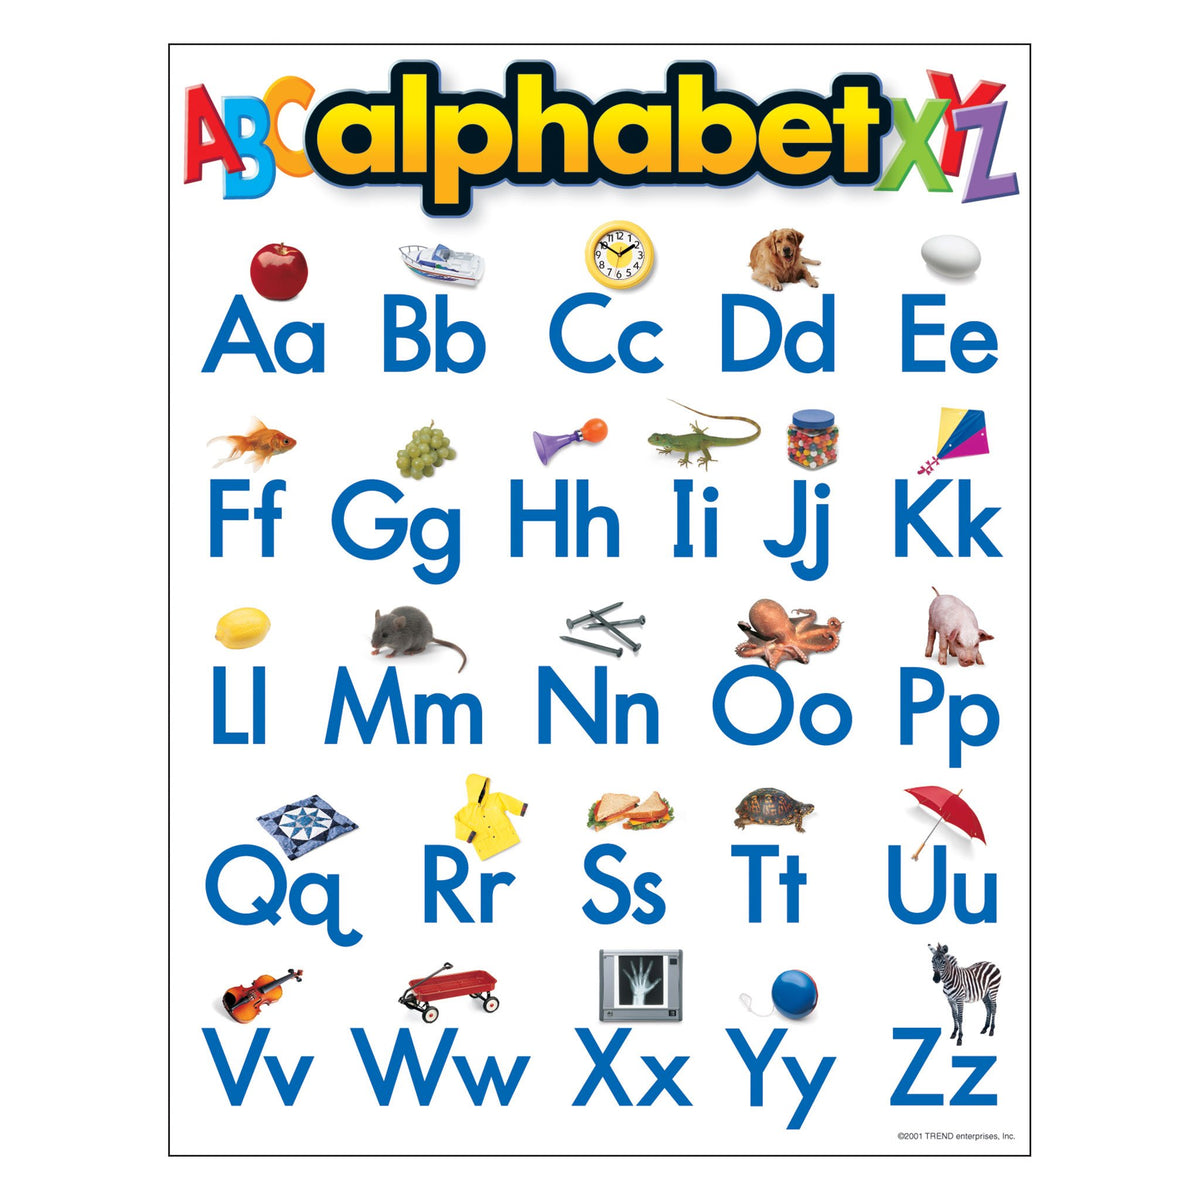 english alphabets chart